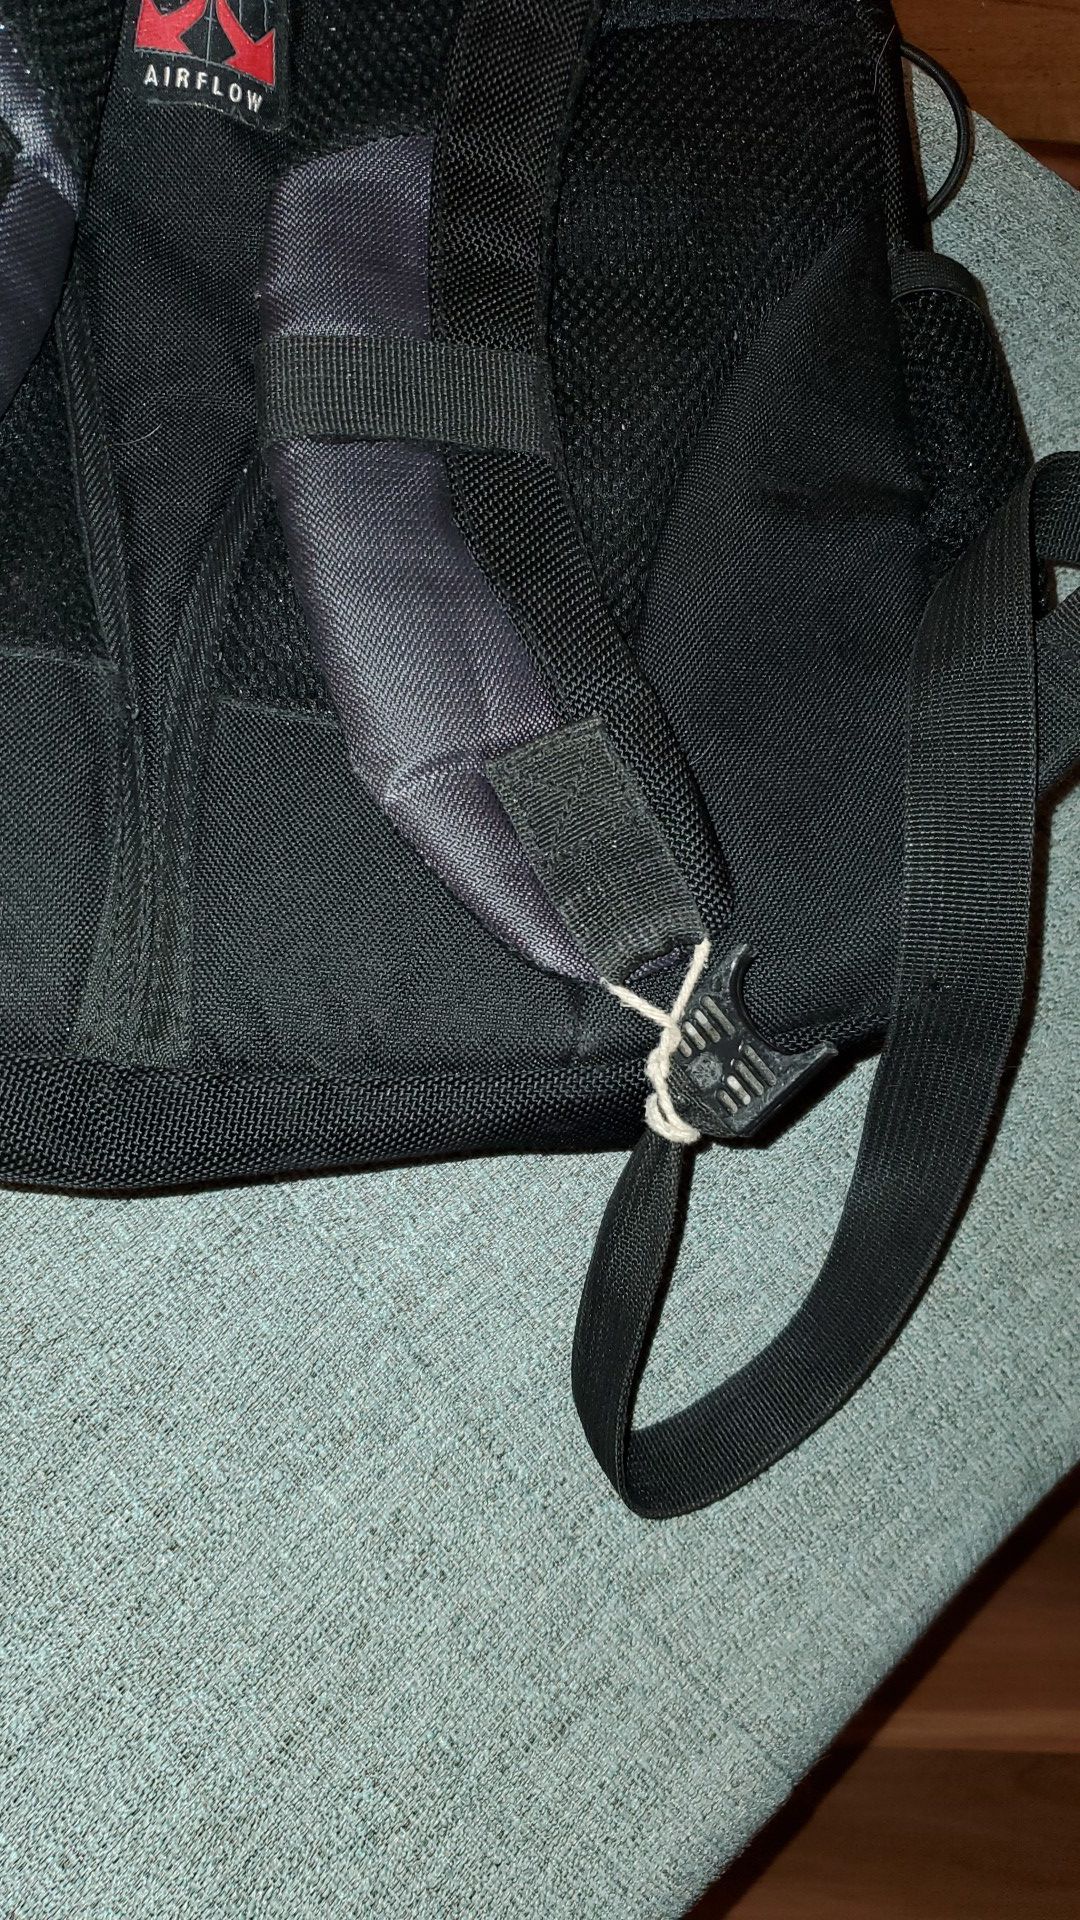 Victorinox Swiss Army backpack